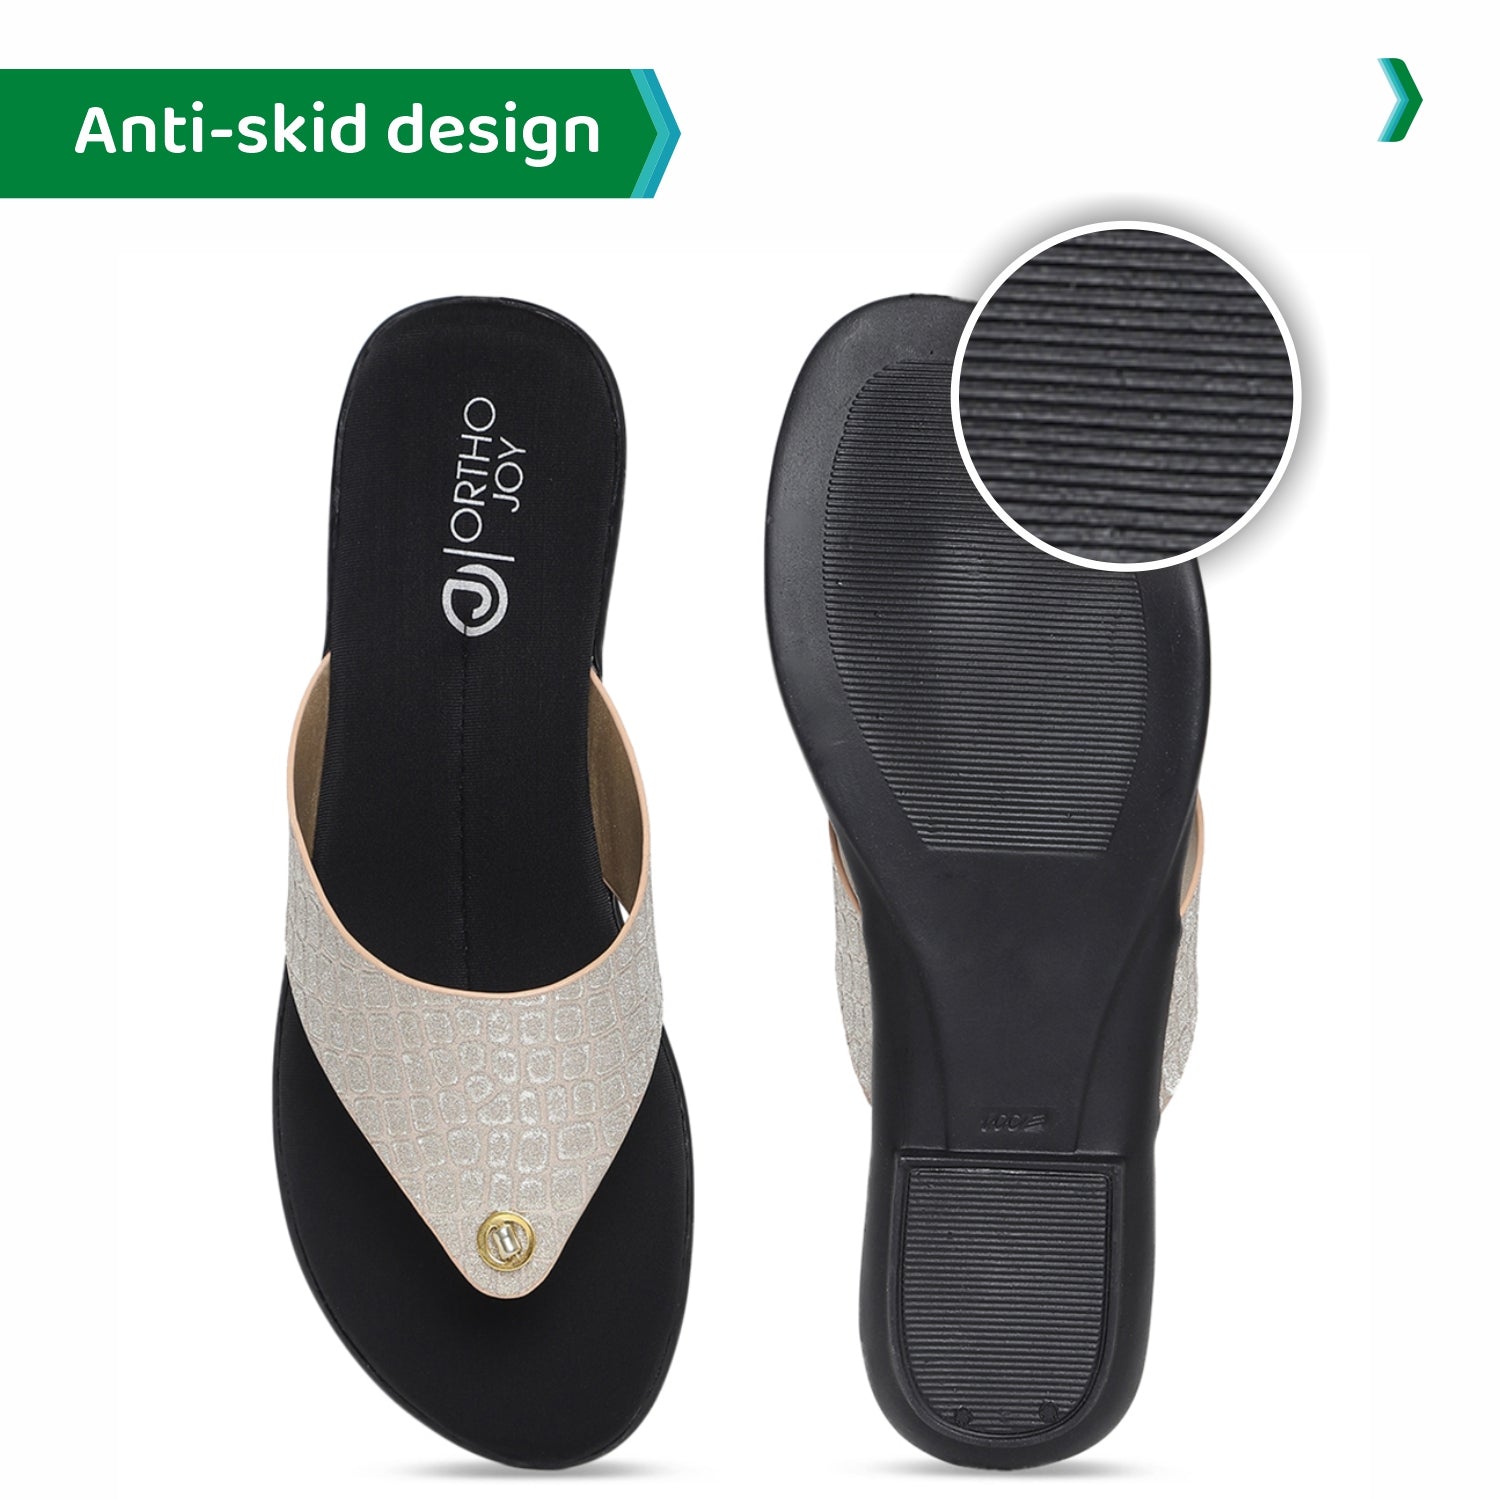 ORTHO JOY Fancy doctor Casual slippers for women